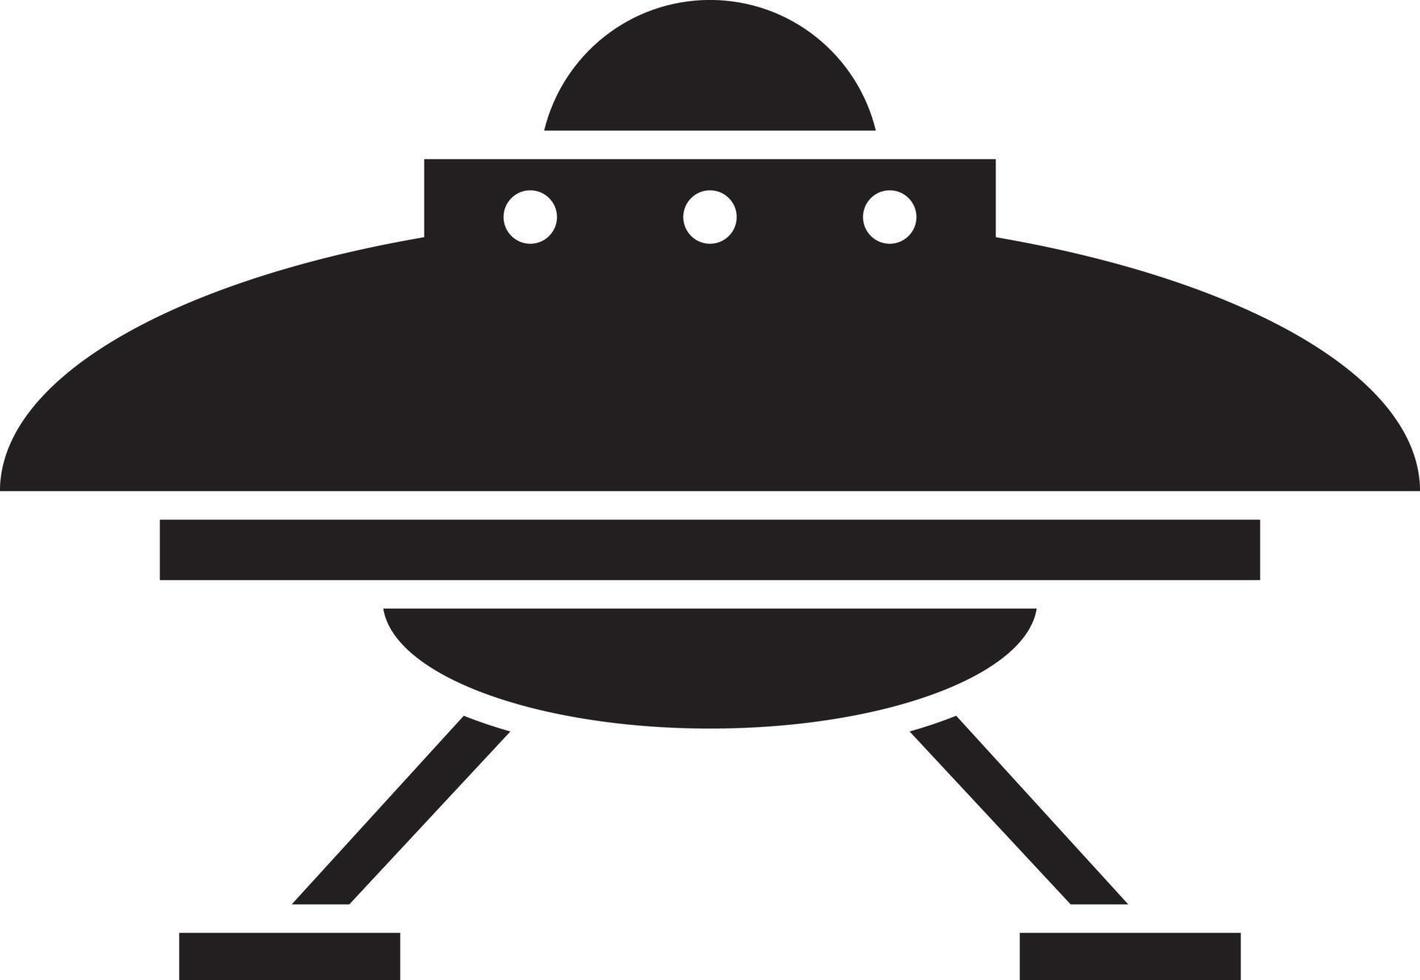 Alien UFO silhouette vector